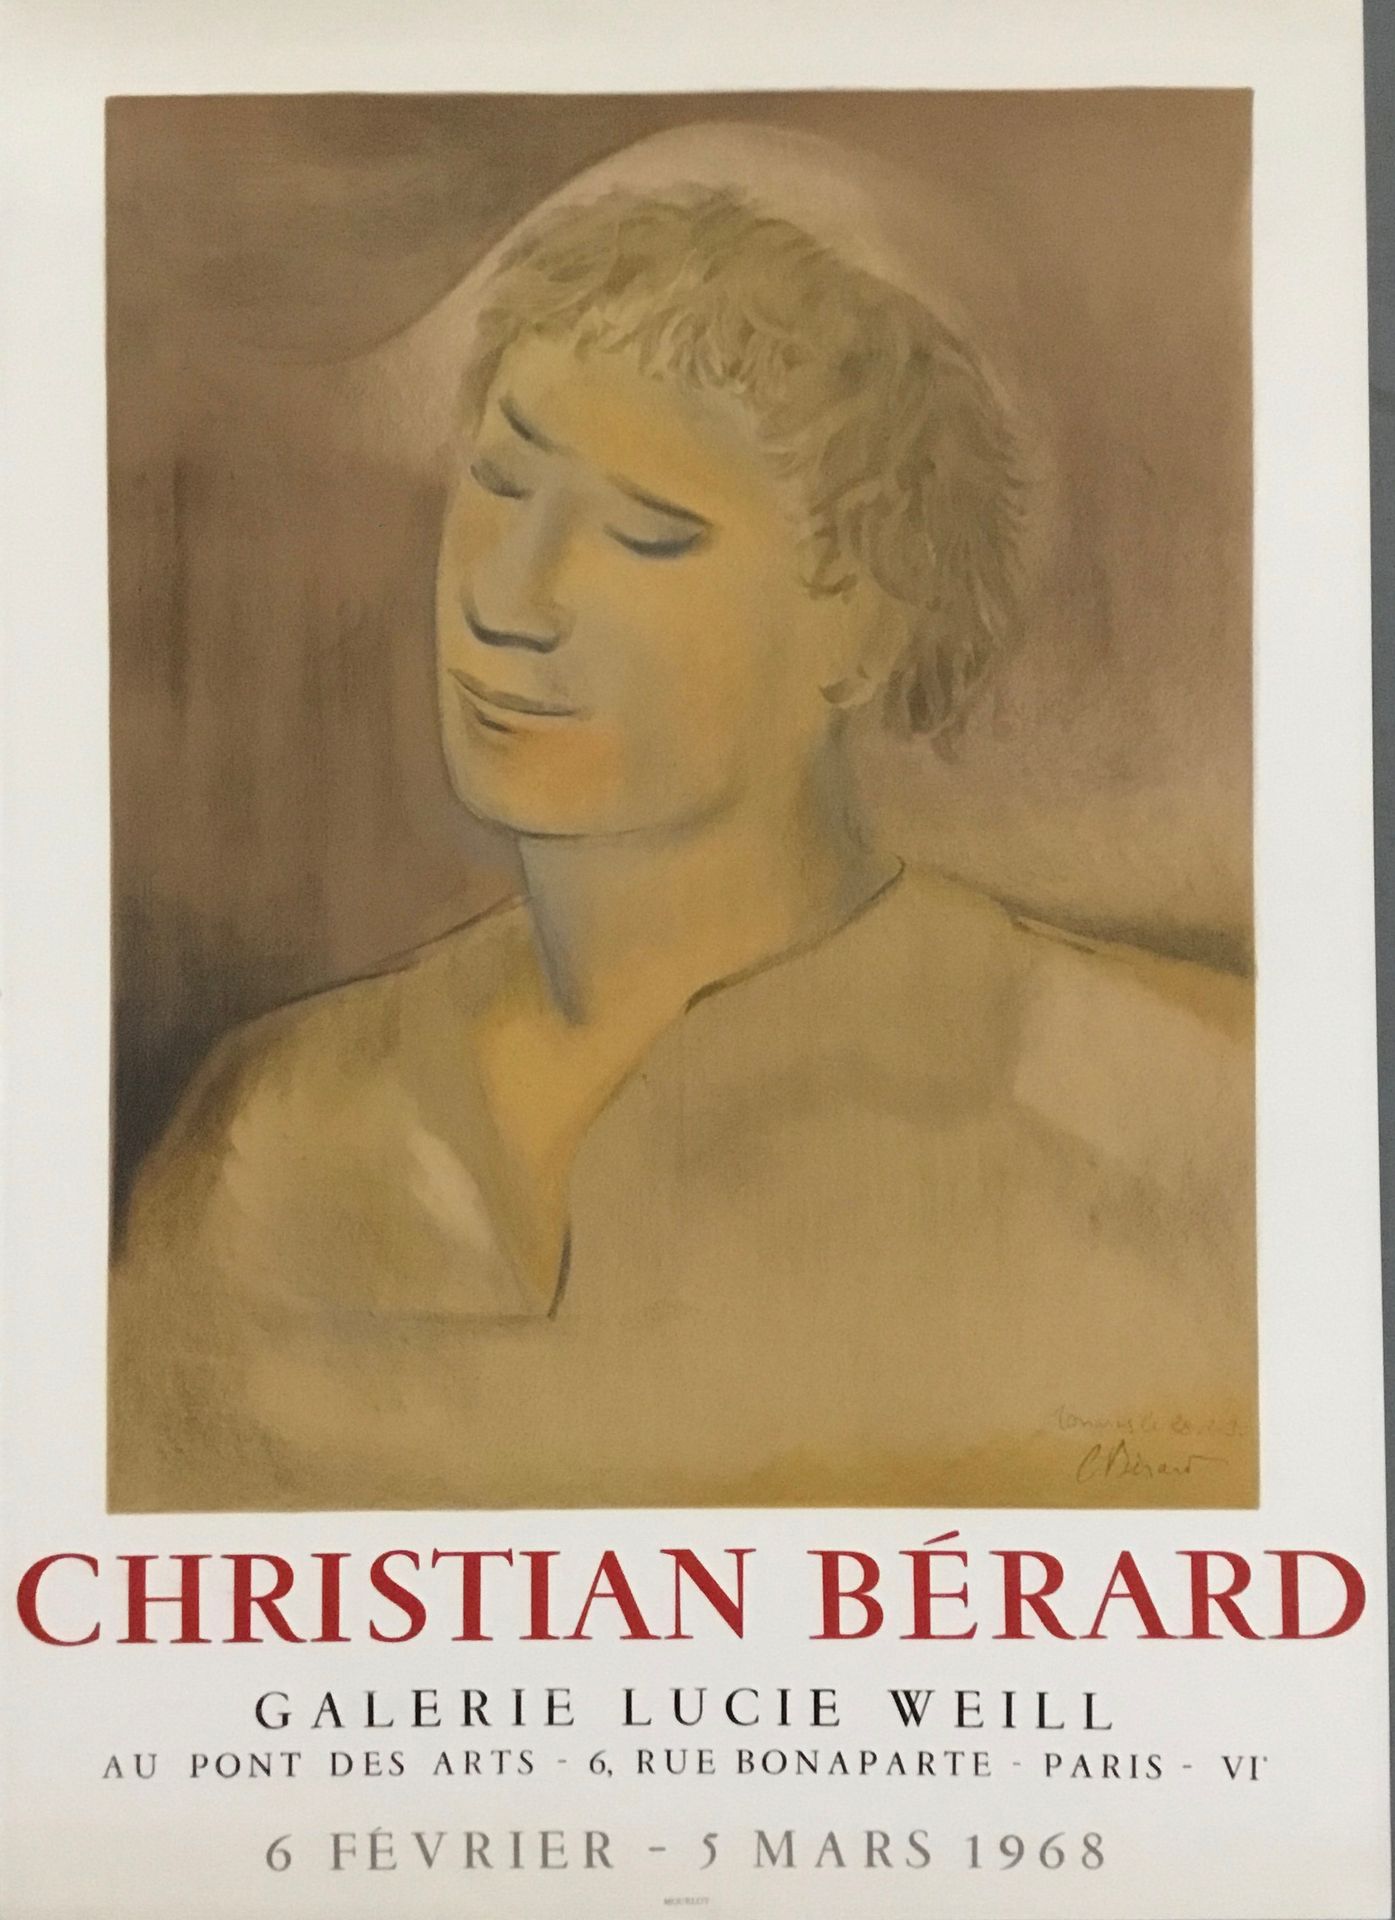 Null BERARD Christian

石版印刷的海报，Mourlot 1968年画廊Lucie WEILL。 

65 x 47 厘米